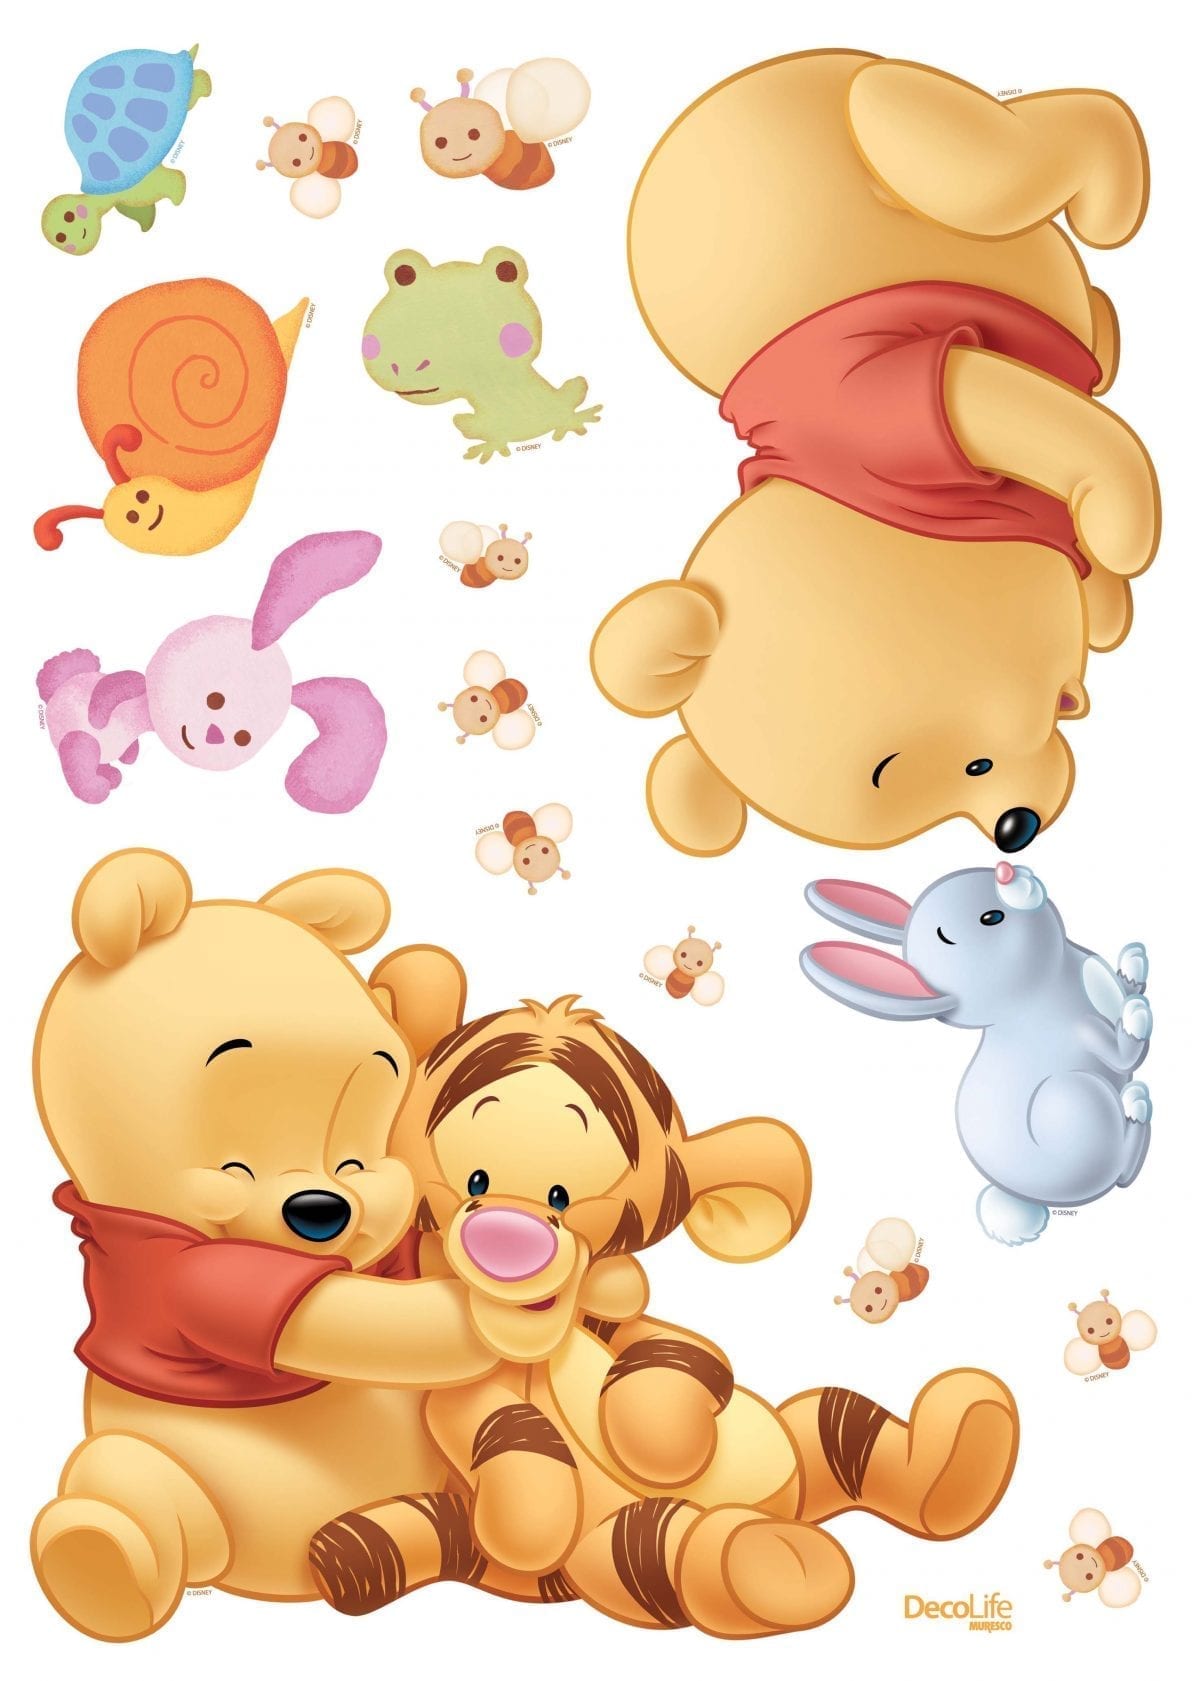 Wallsticker infantil Winnie the pooh DISNEY 1523-1Decolife Muresco